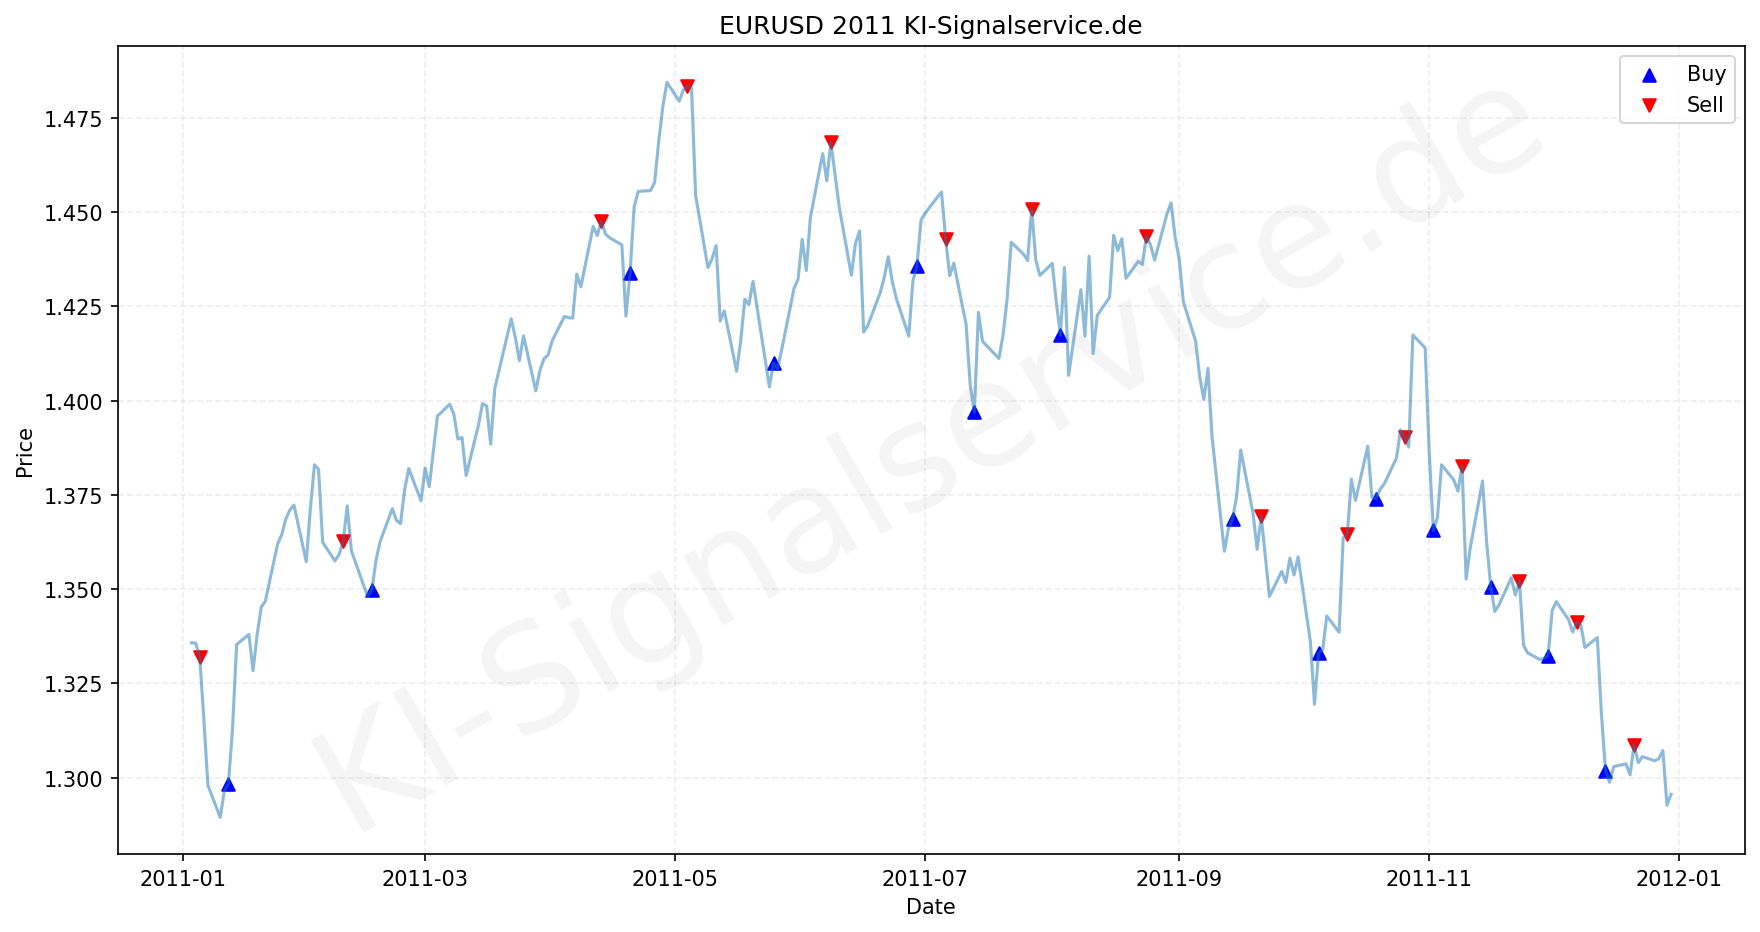 EURUSD Chart - KI Tradingsignale 2011